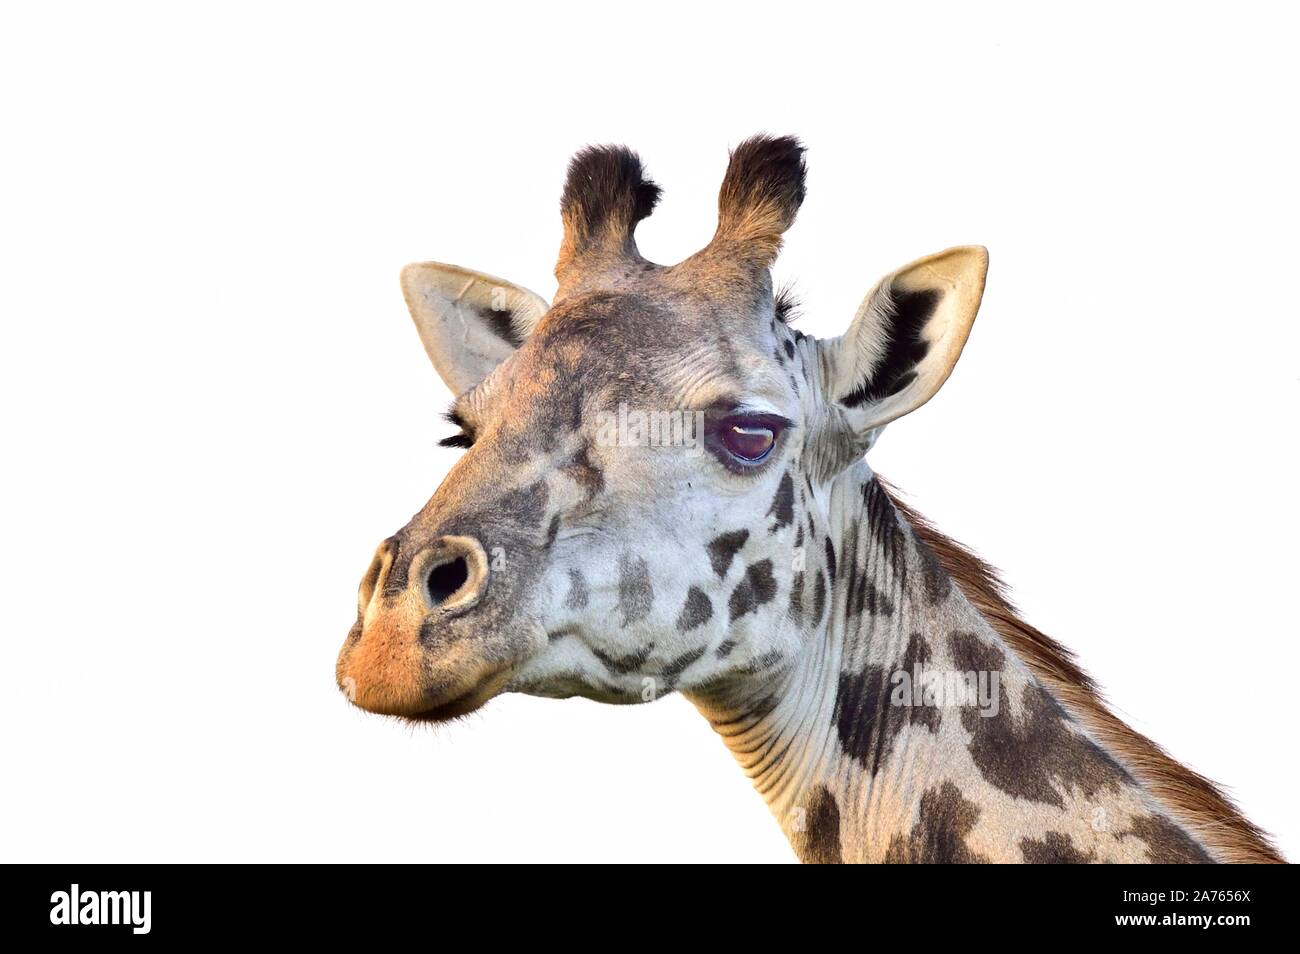 A giraffe close up Stock Photo